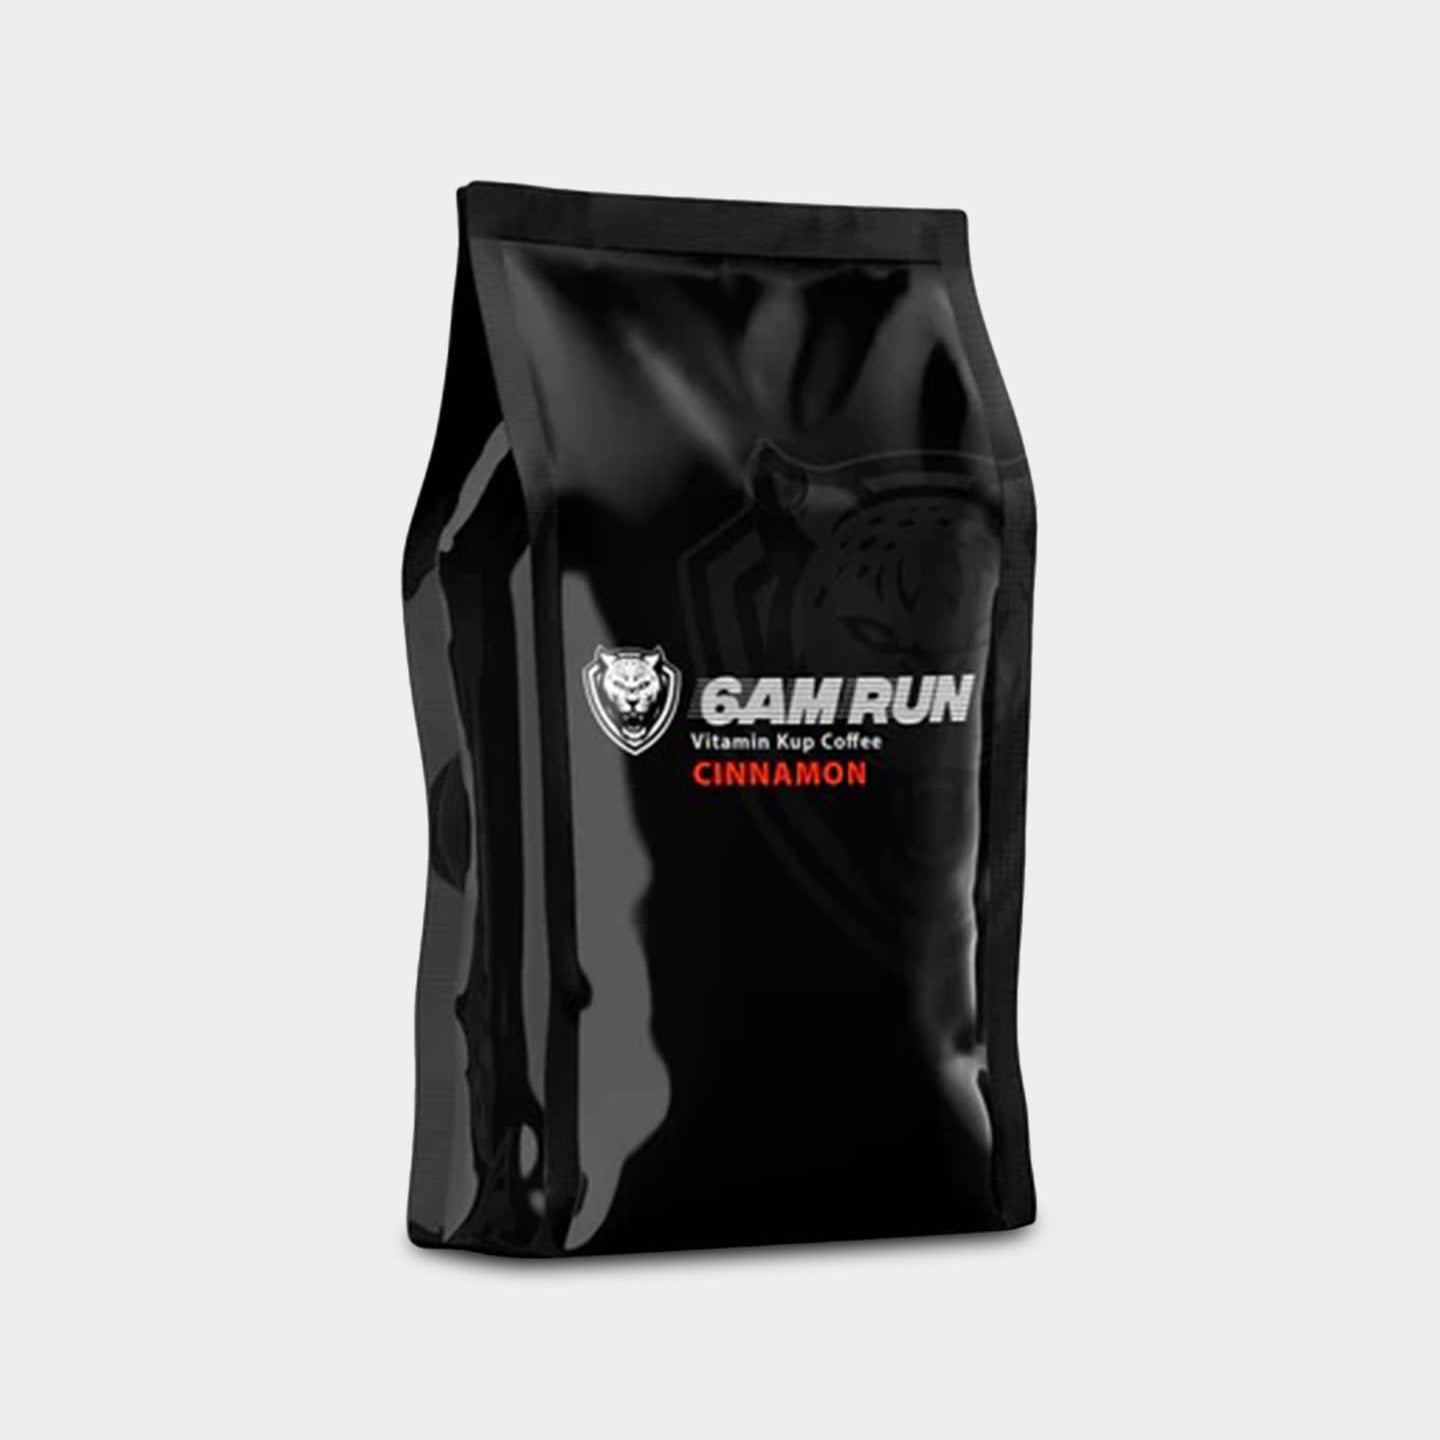 6AM Run Vitamin Coffee, Cinnamon Brew, 1lb A1